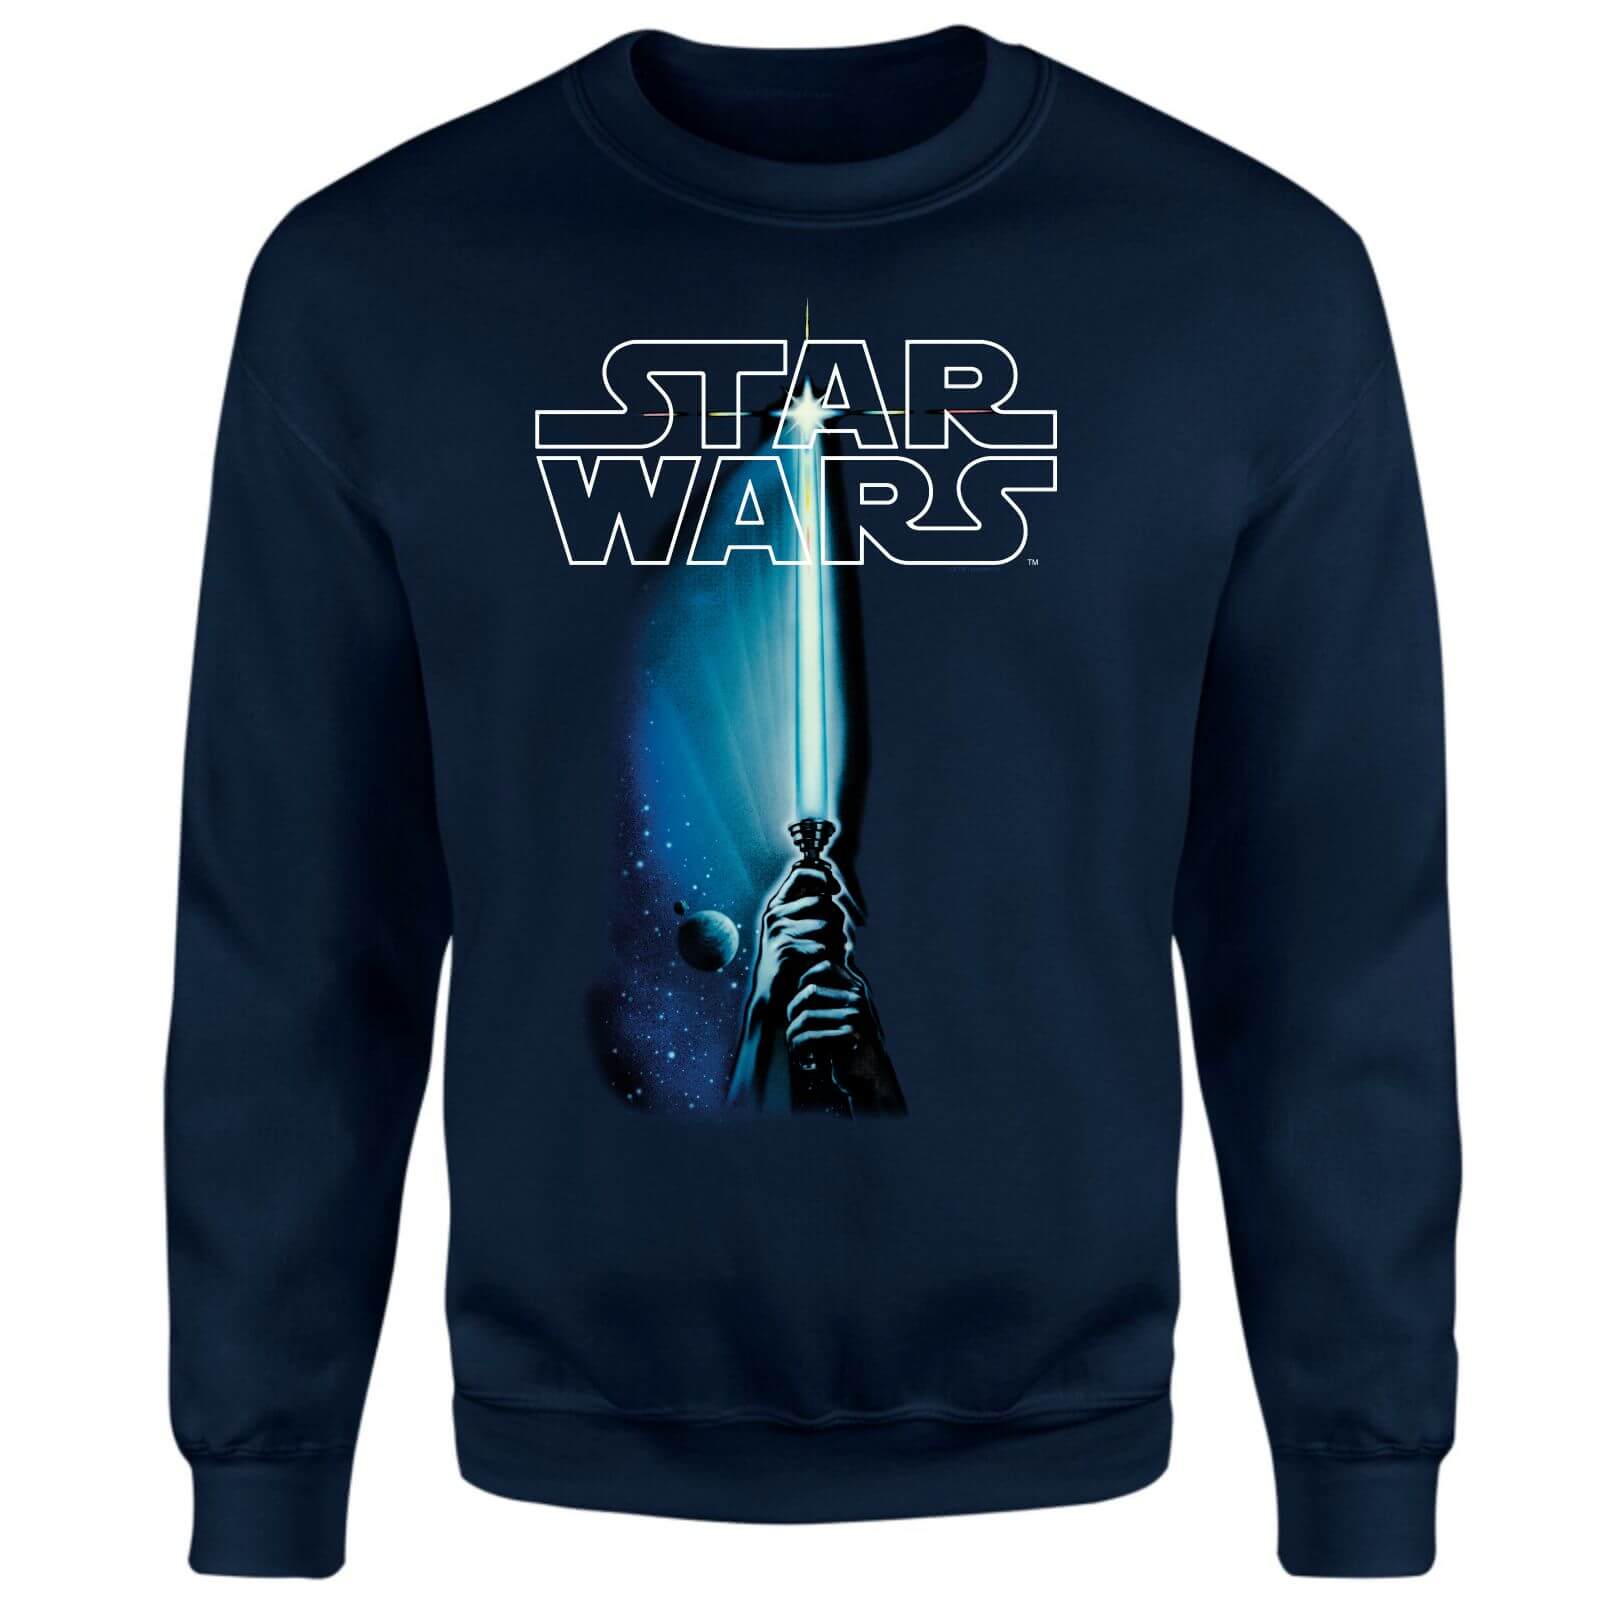 Star Wars Classic Lightsaber Sweatshirt - Navy - XXL - Navy blauw